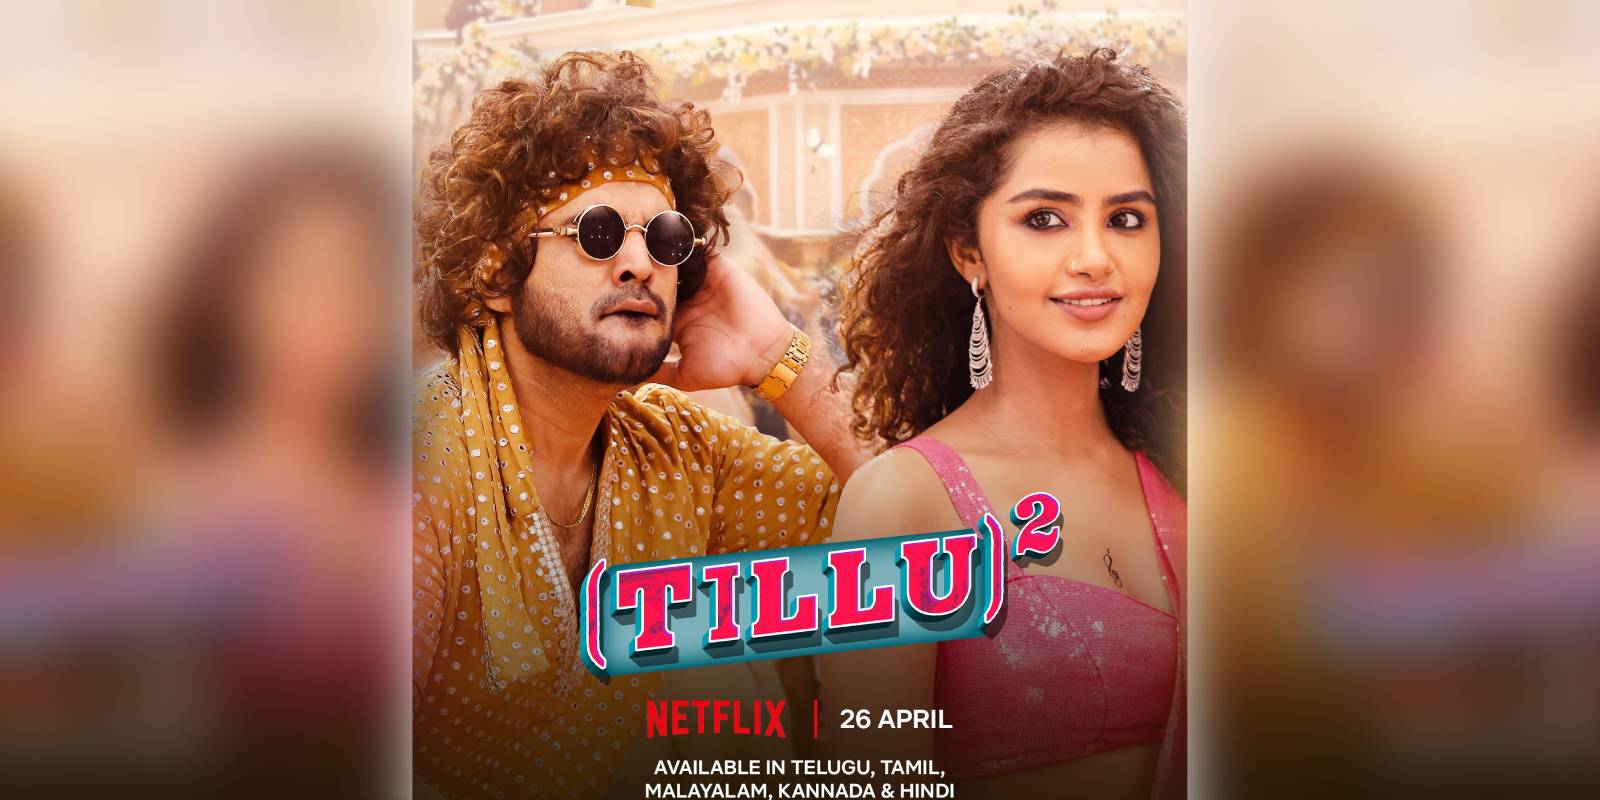 Tillu Square debuting Netflix on 26 April